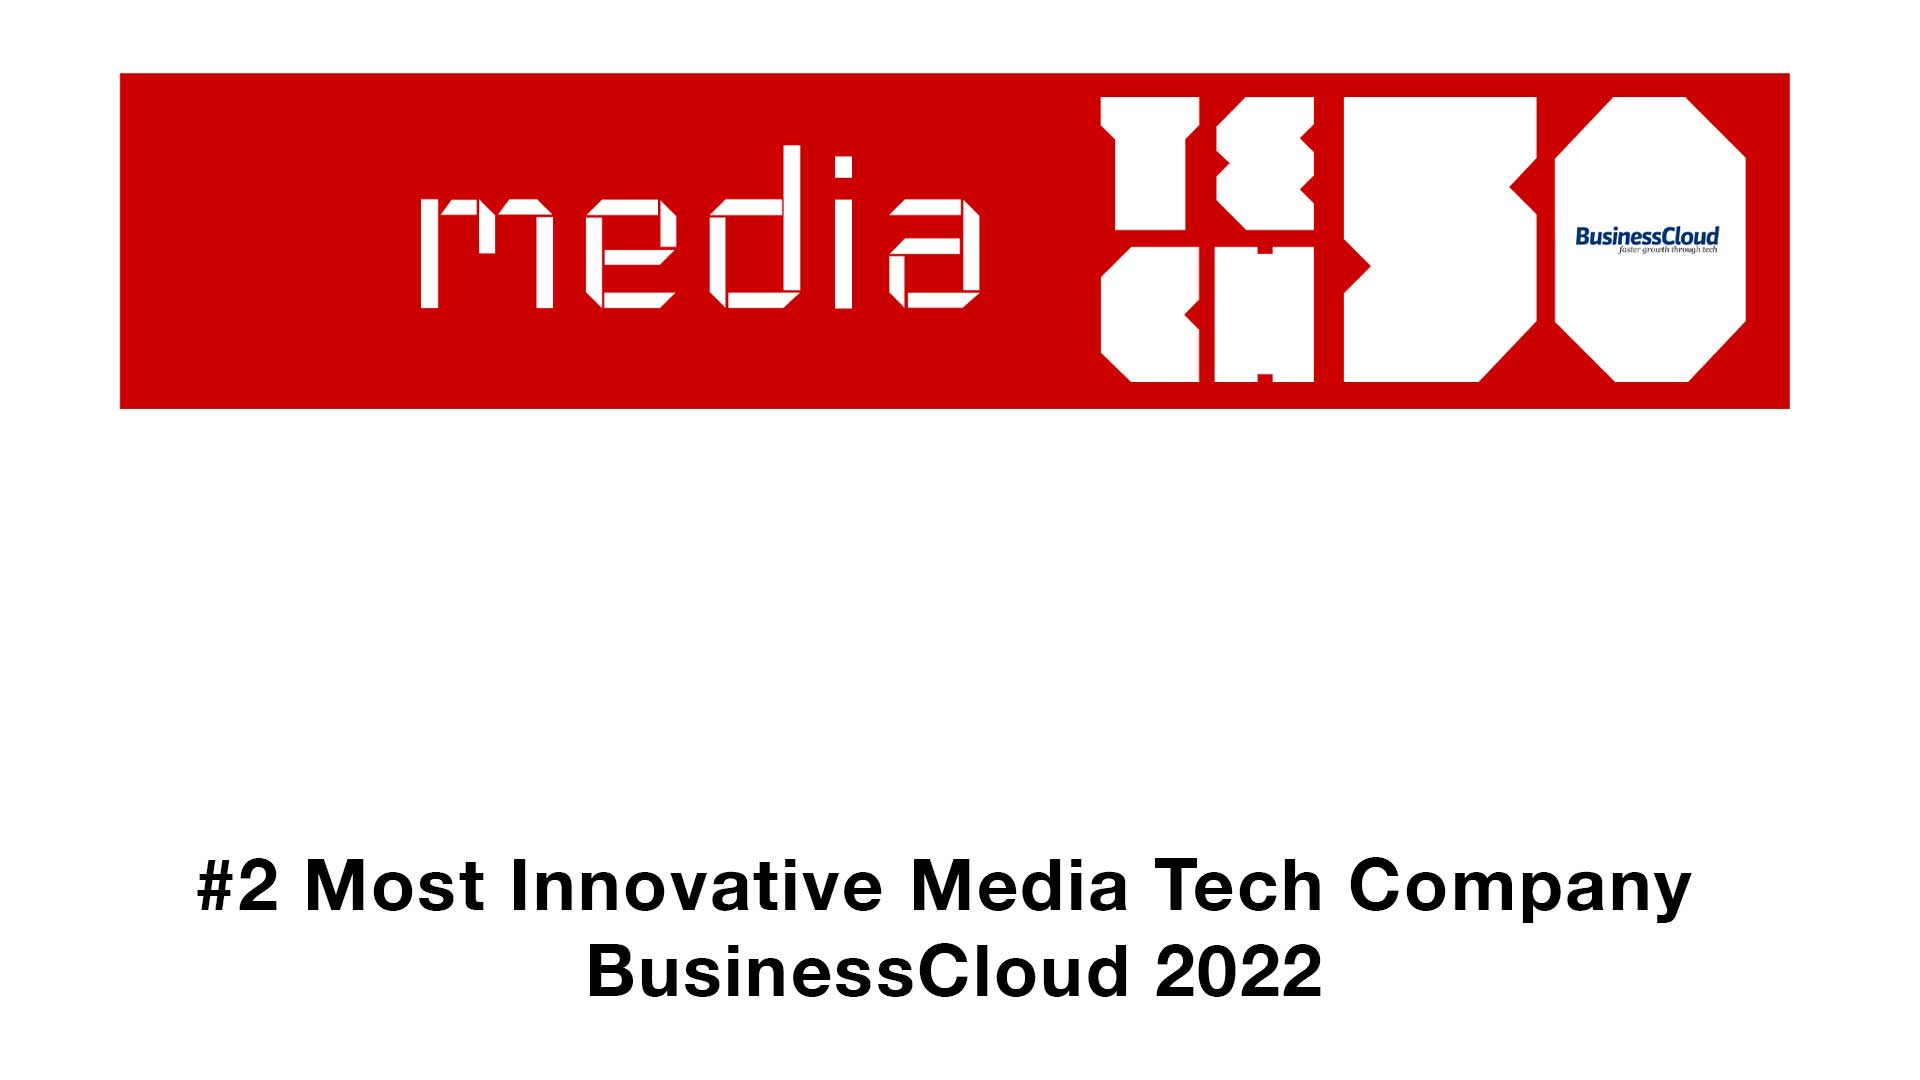 Business Cloud 2nd Most Innovative Media Tech Company 2022